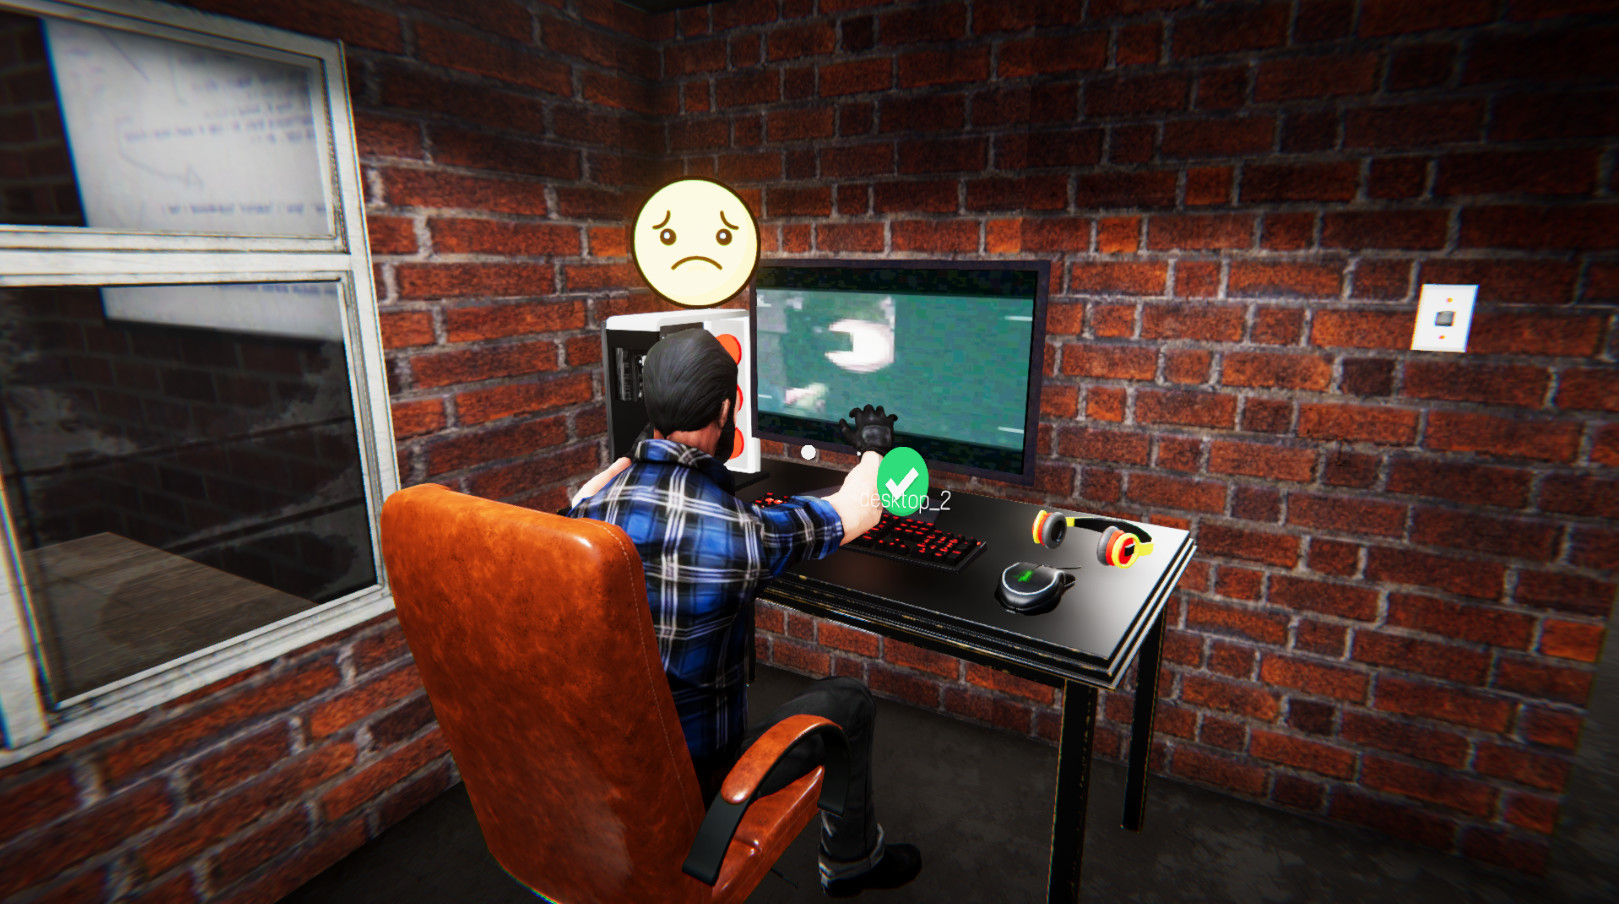 Hookah Cafe Simulator, PC Steam Jogo